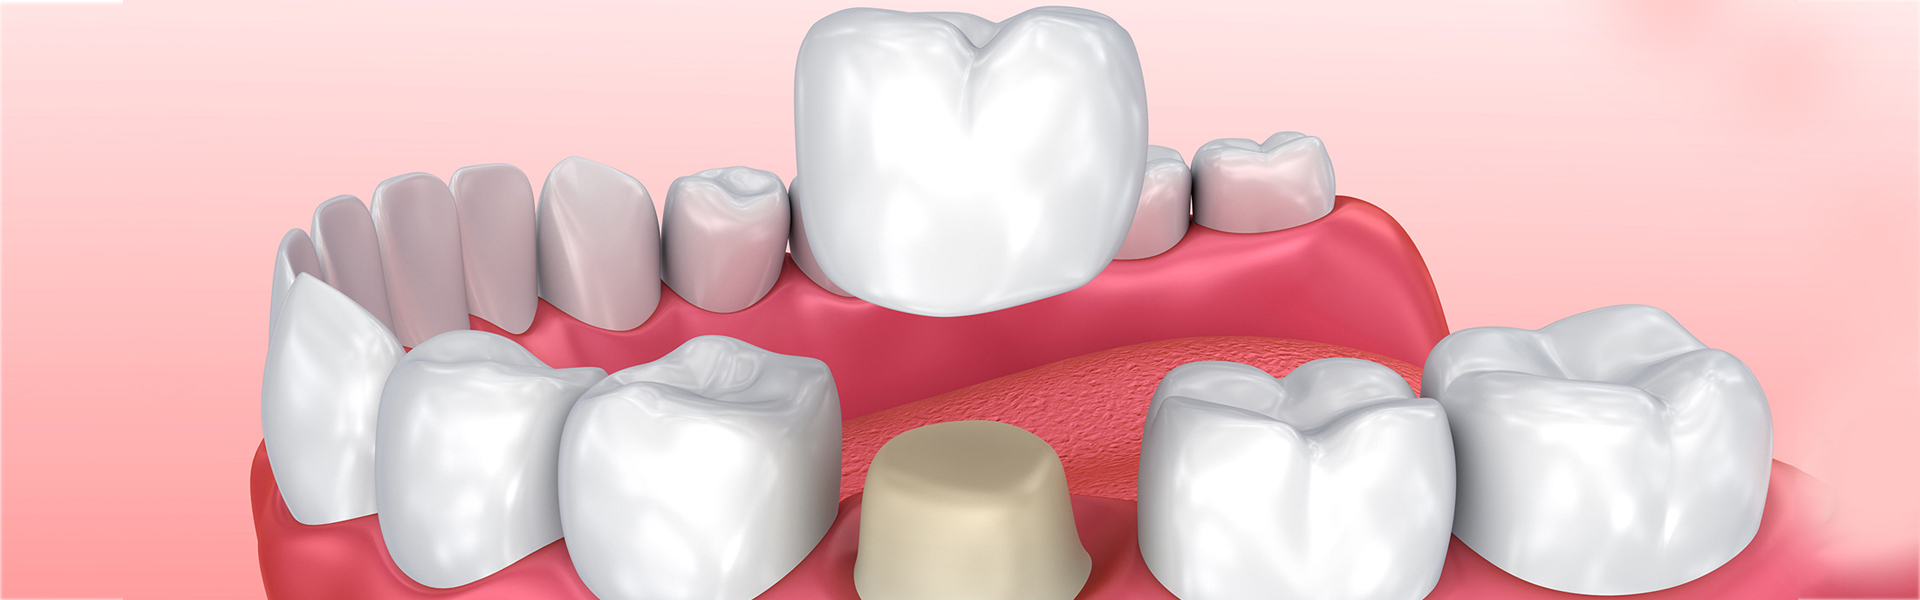 How Do Dental Crowns Work?